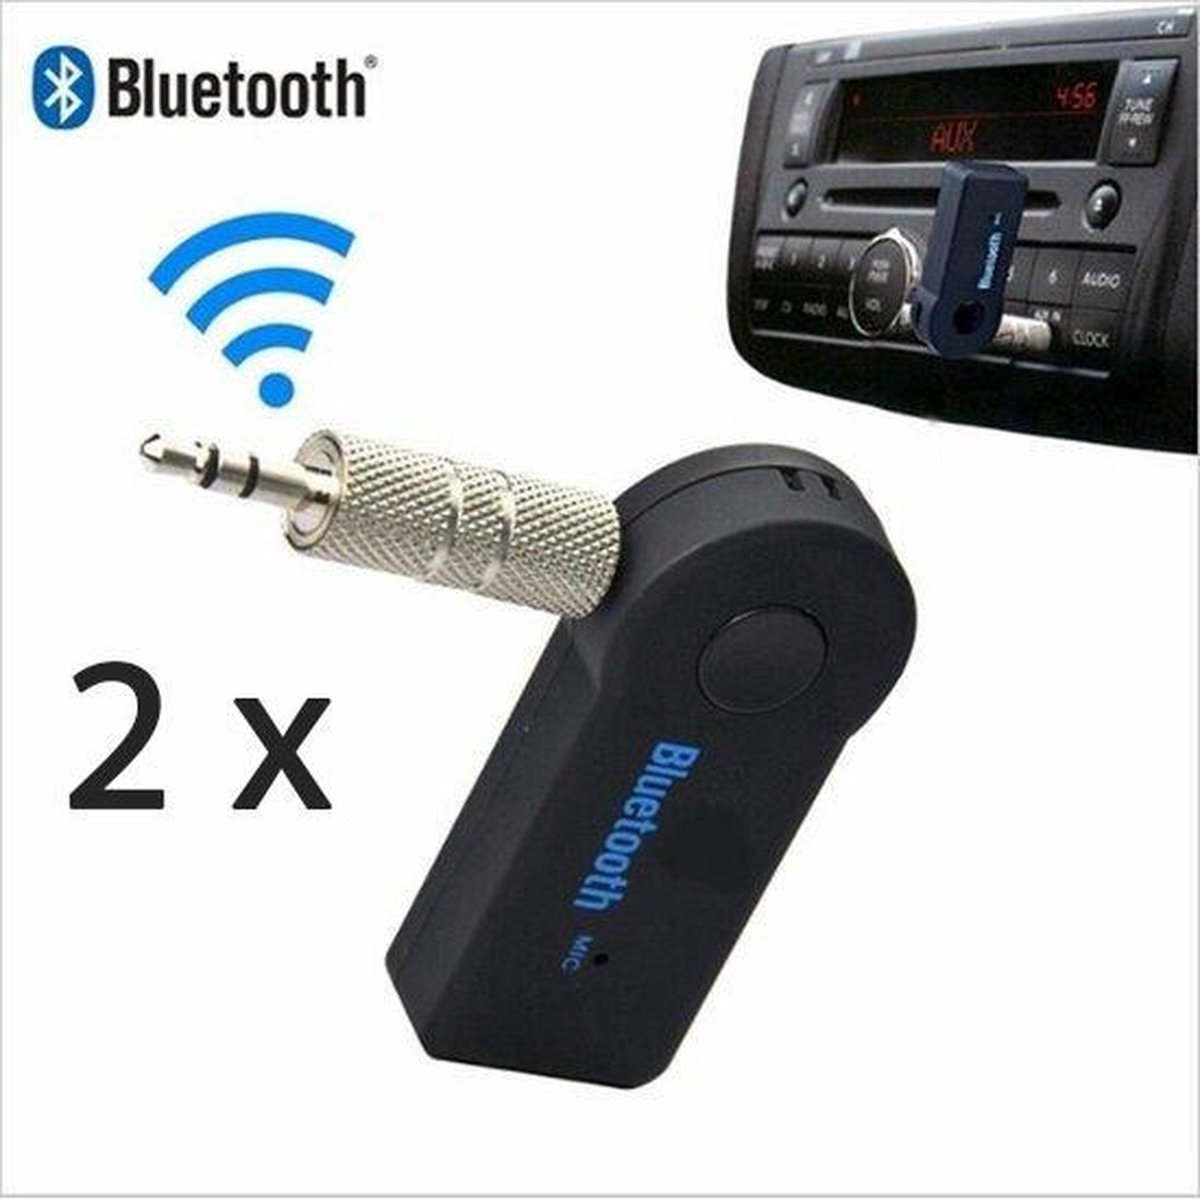 2 Stuks Bluetooth muziekontvanger | Draadloze bluetooth verbinding via deze bluetooth receiver! - Merkloos